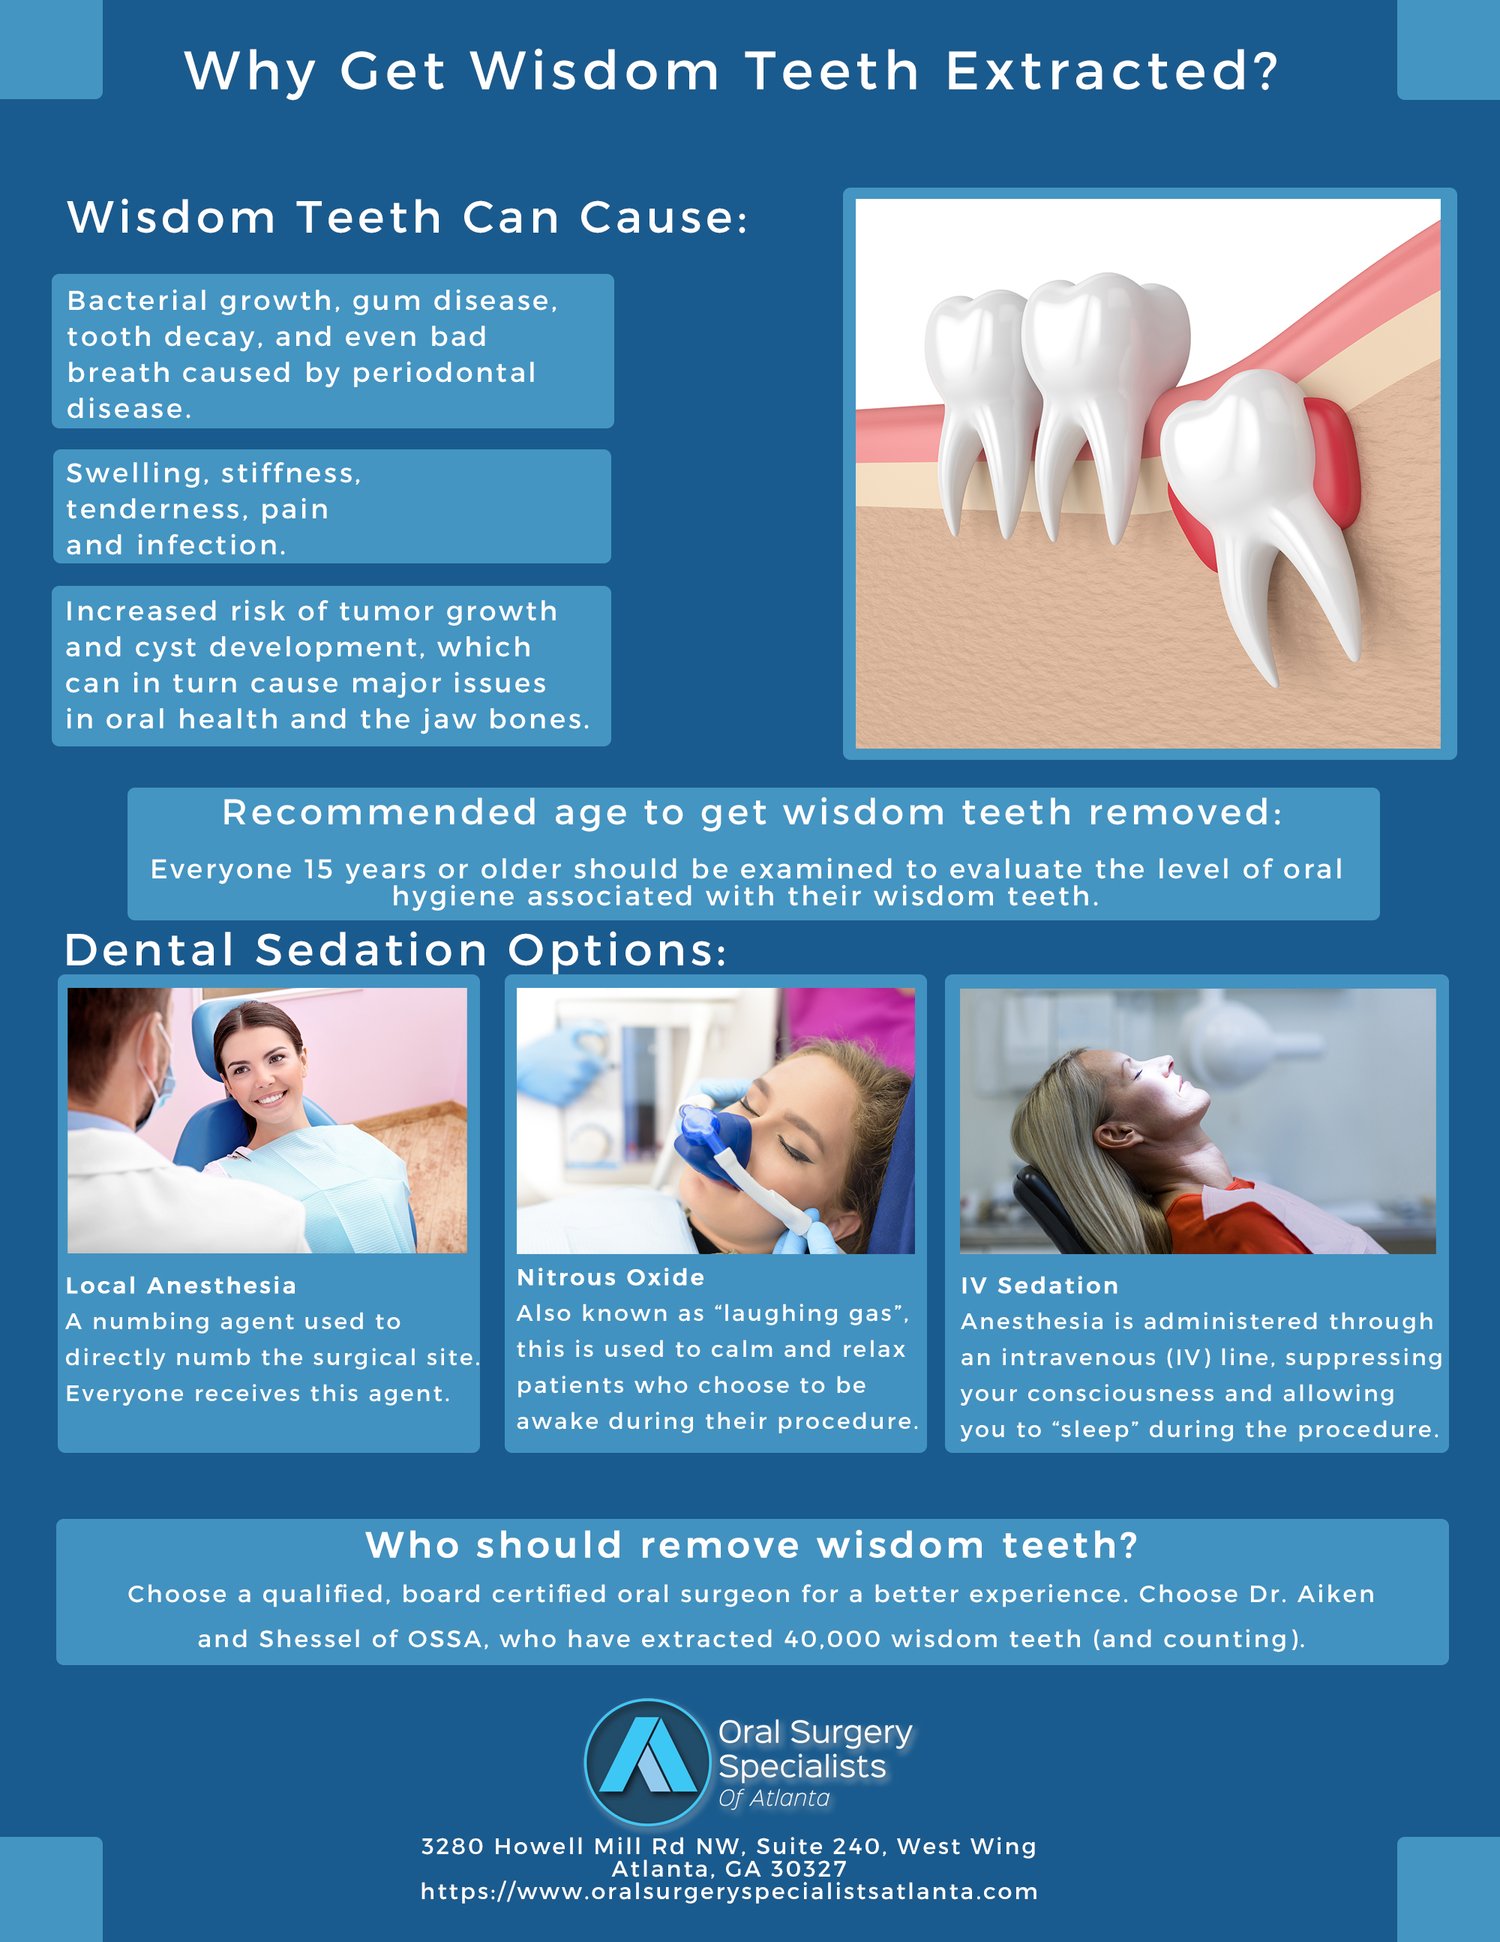 Is Removing Wisdom Teeth Medical or Dental?